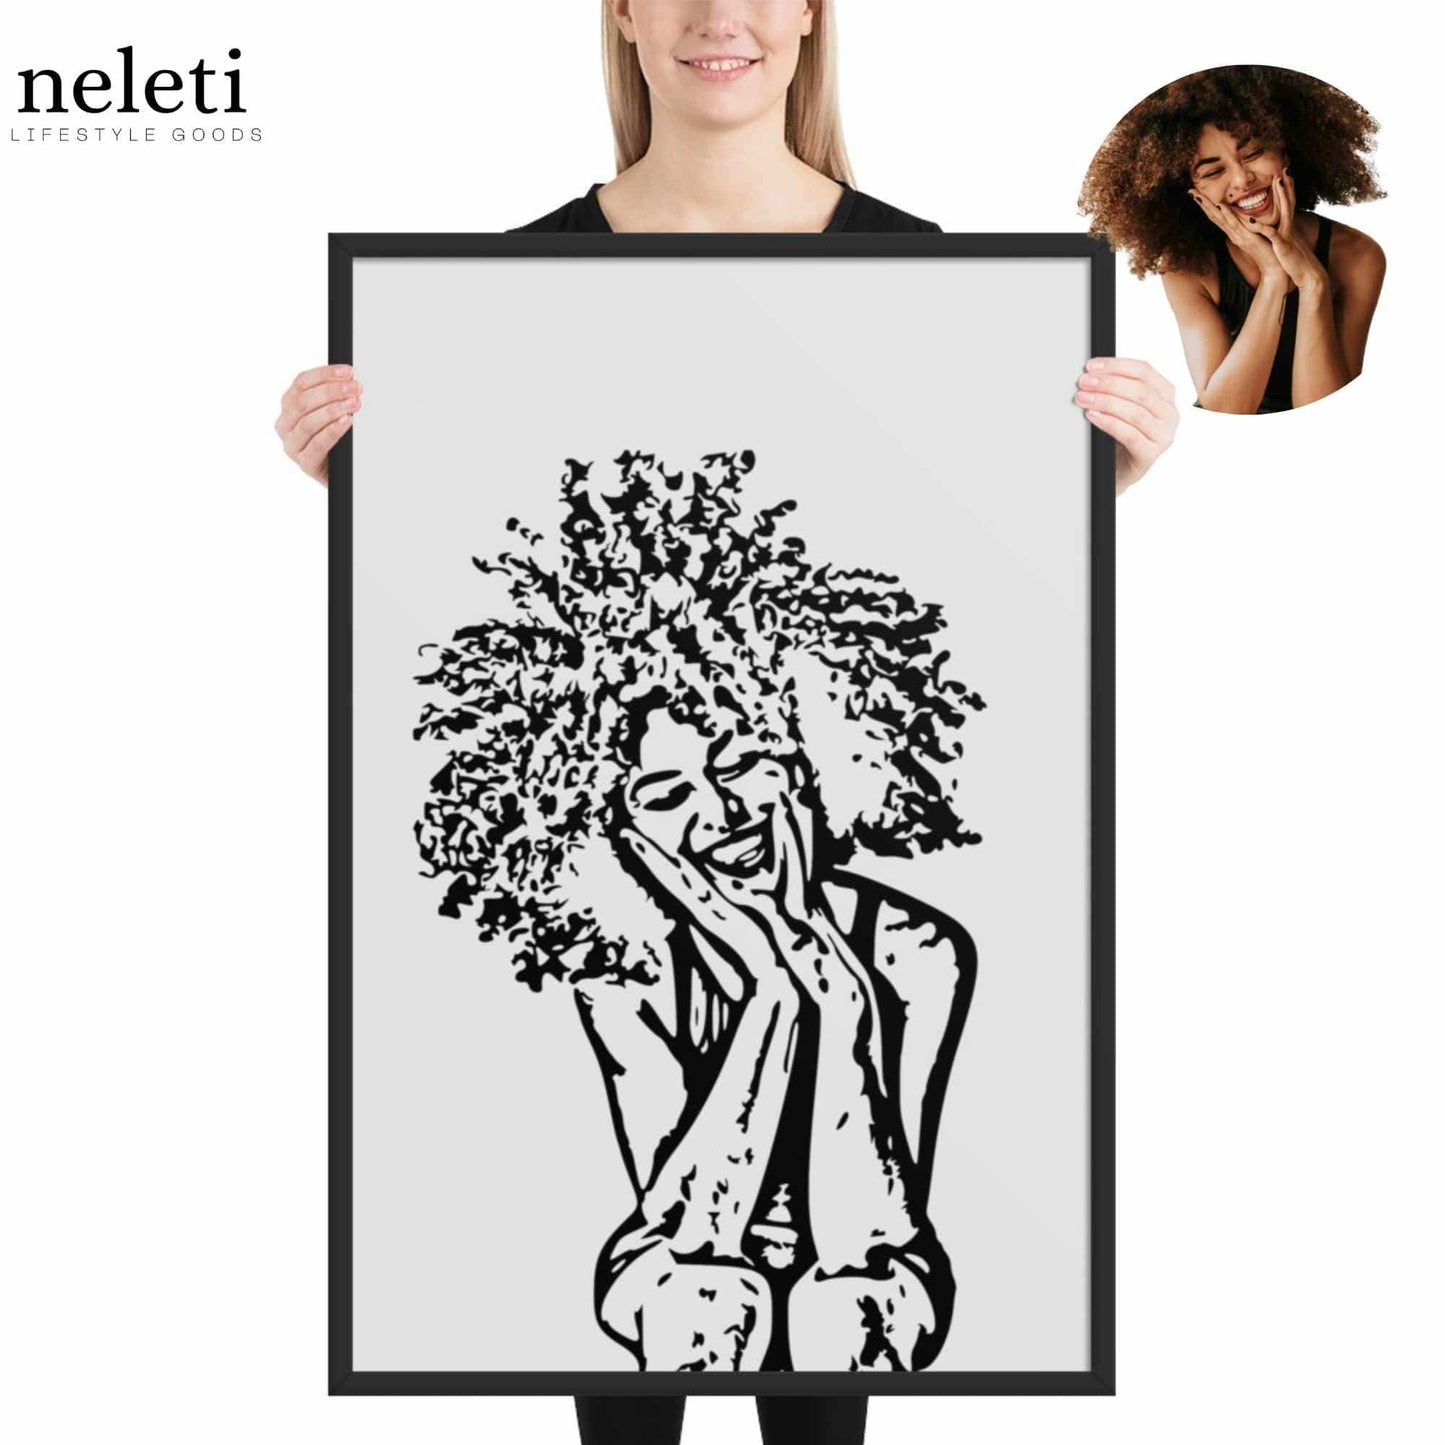 poster-print-with-custom-girl-photo-neleti.com